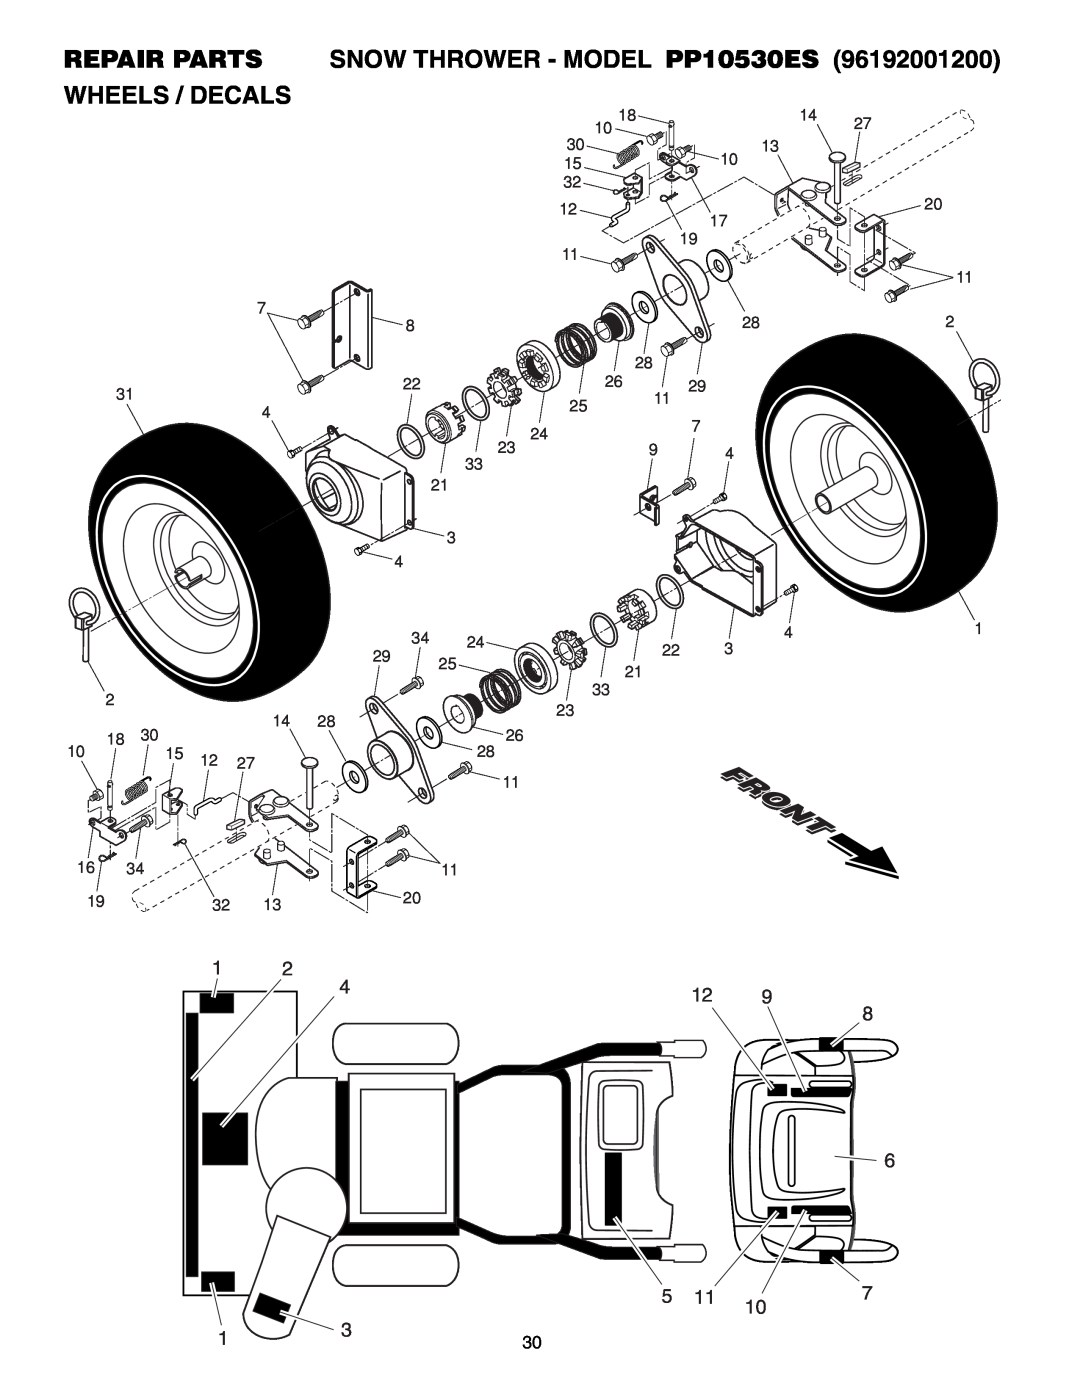 Poulan owner manual Repair Parts, SNOW THROWER - MODEL PP10530ES, Wheels / Decals 